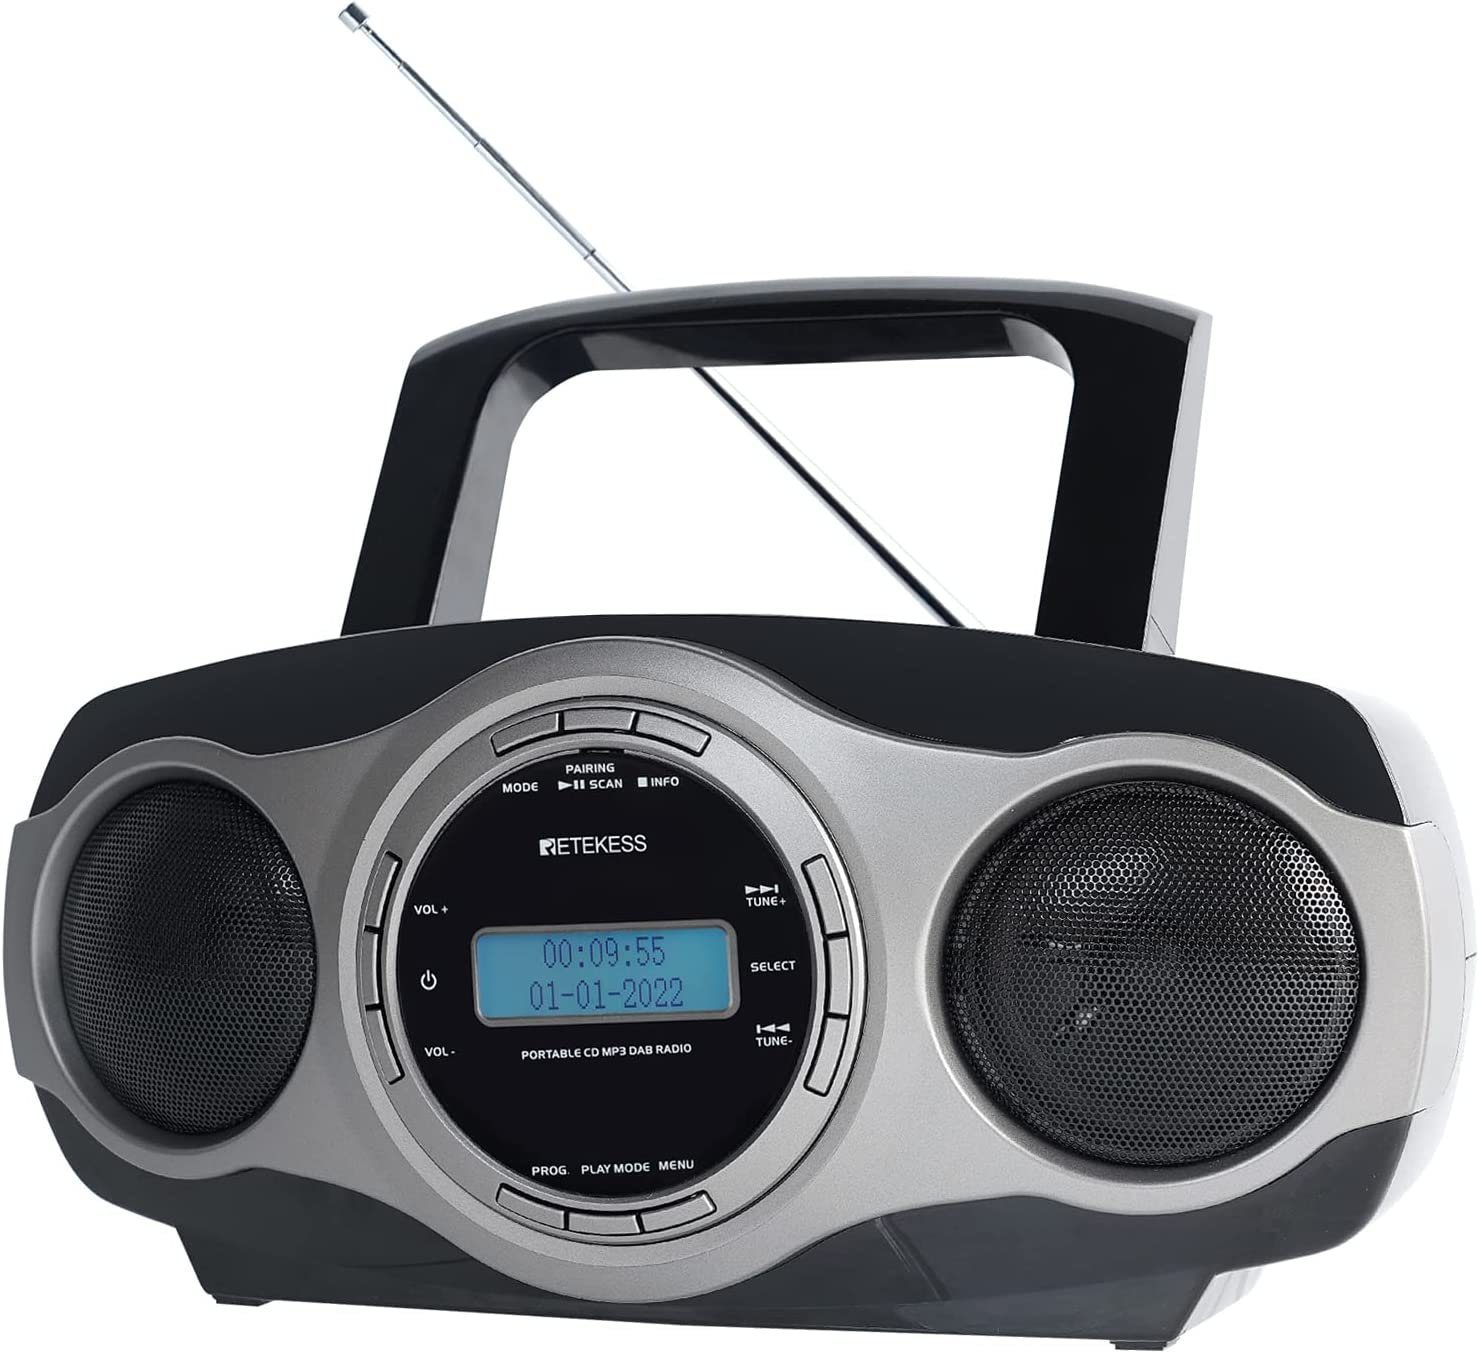 FM DAB Radio (DAB mit CD-Radiorecorder CD-Player Retekess Bluetooth, Radio mit FM-Stereo, Player) MP3 TR631